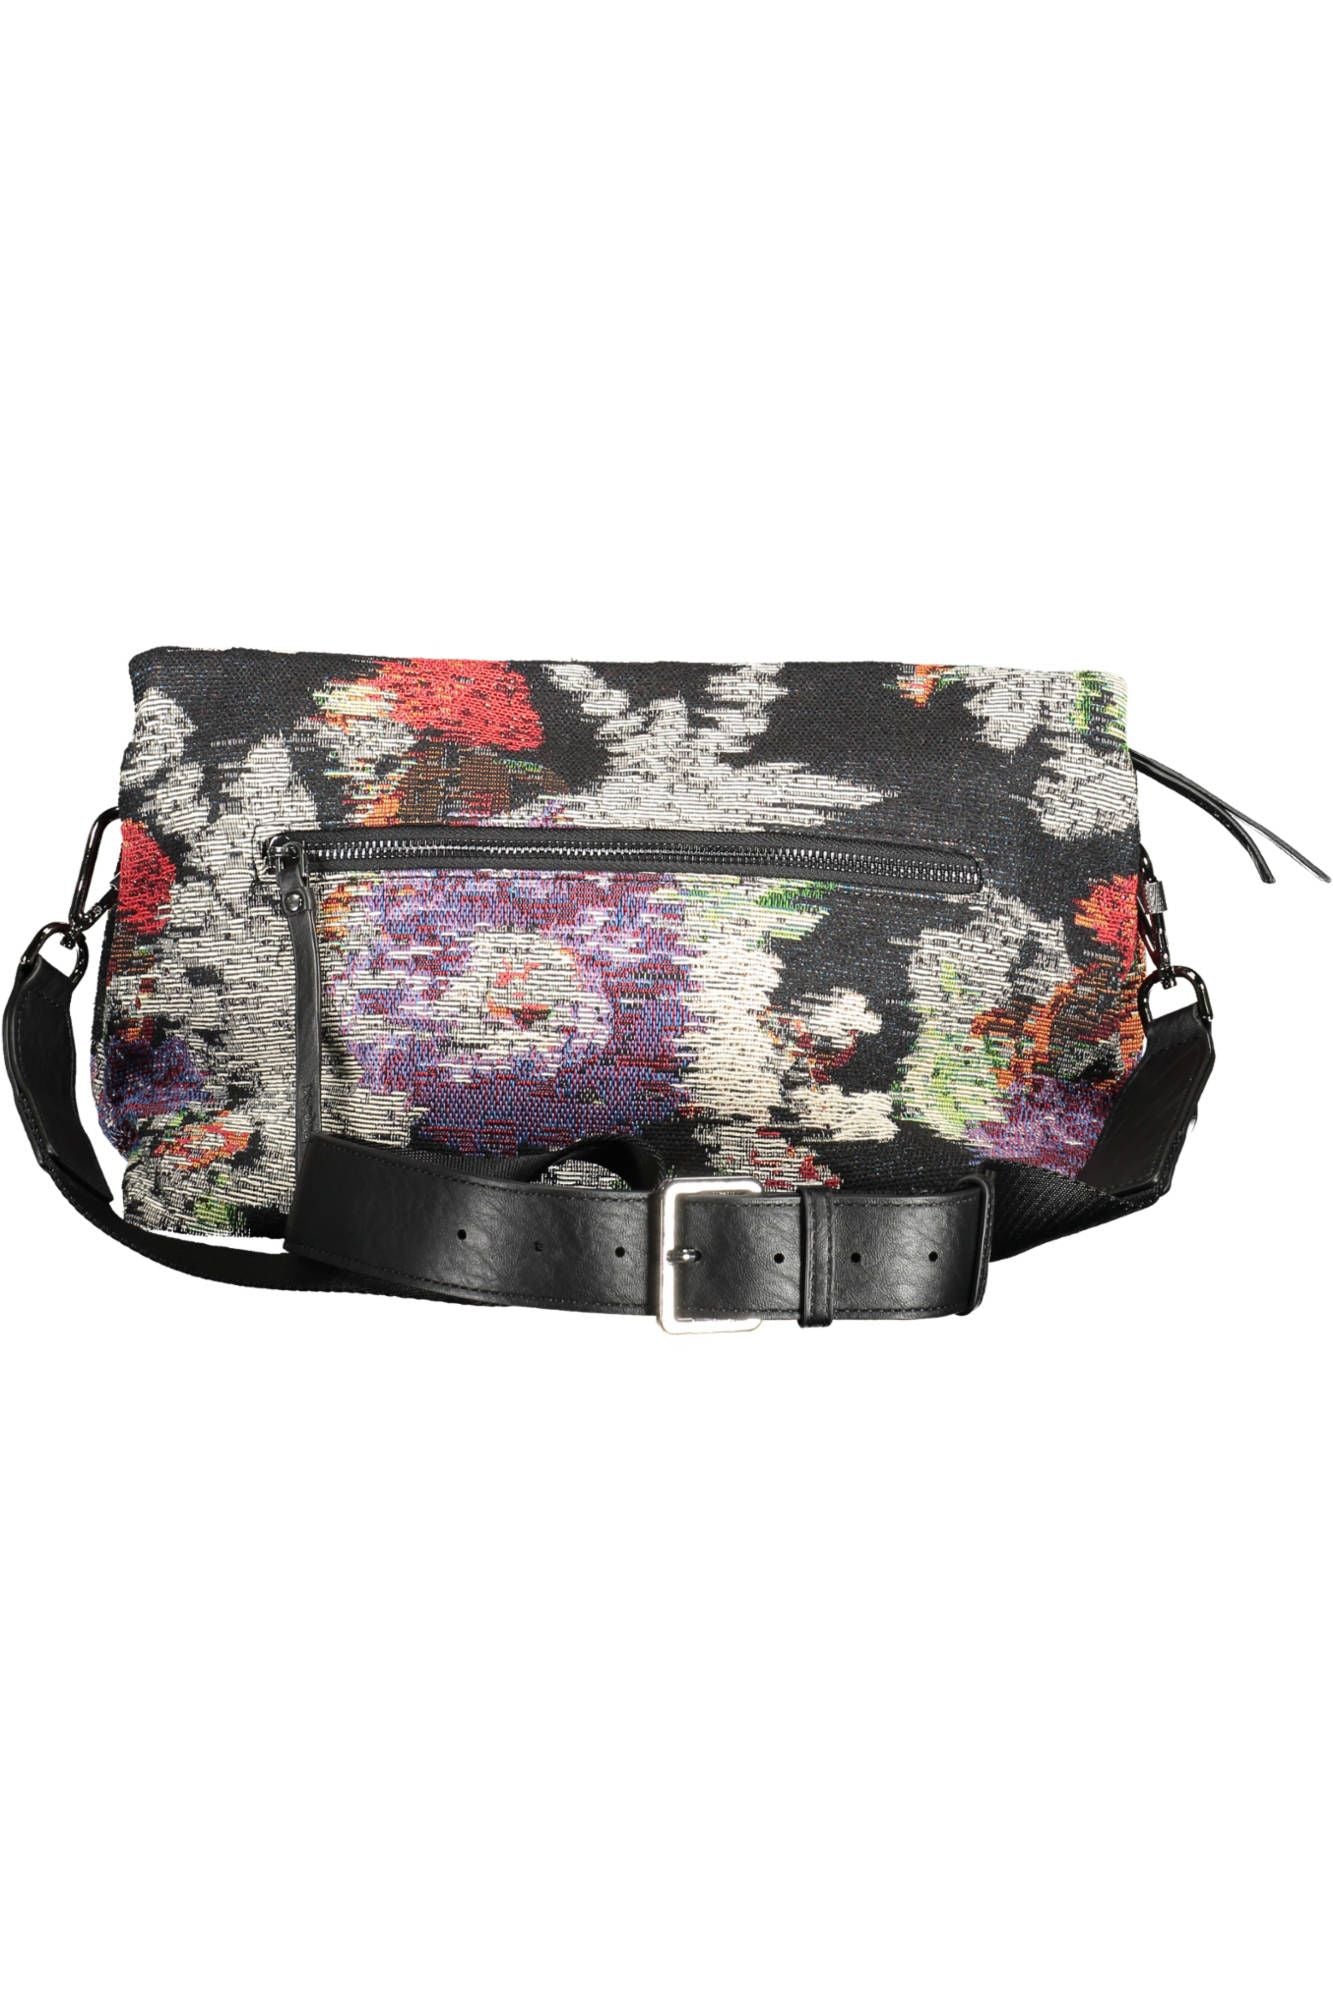 Chic Black Cotton Handbag with Contrasting Details